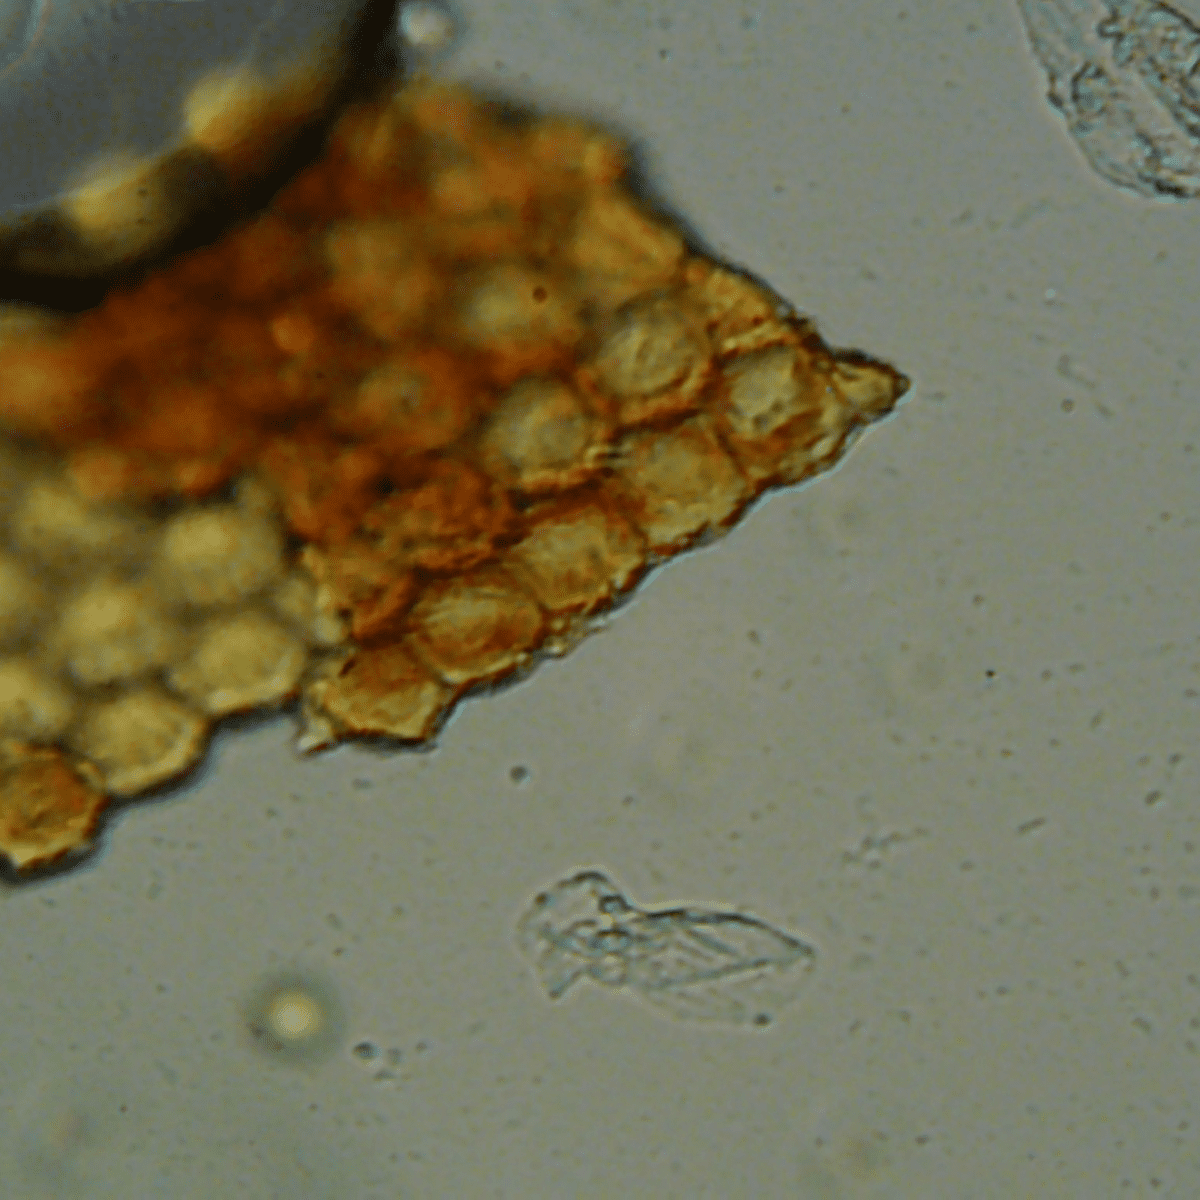 microorganisms under microscope